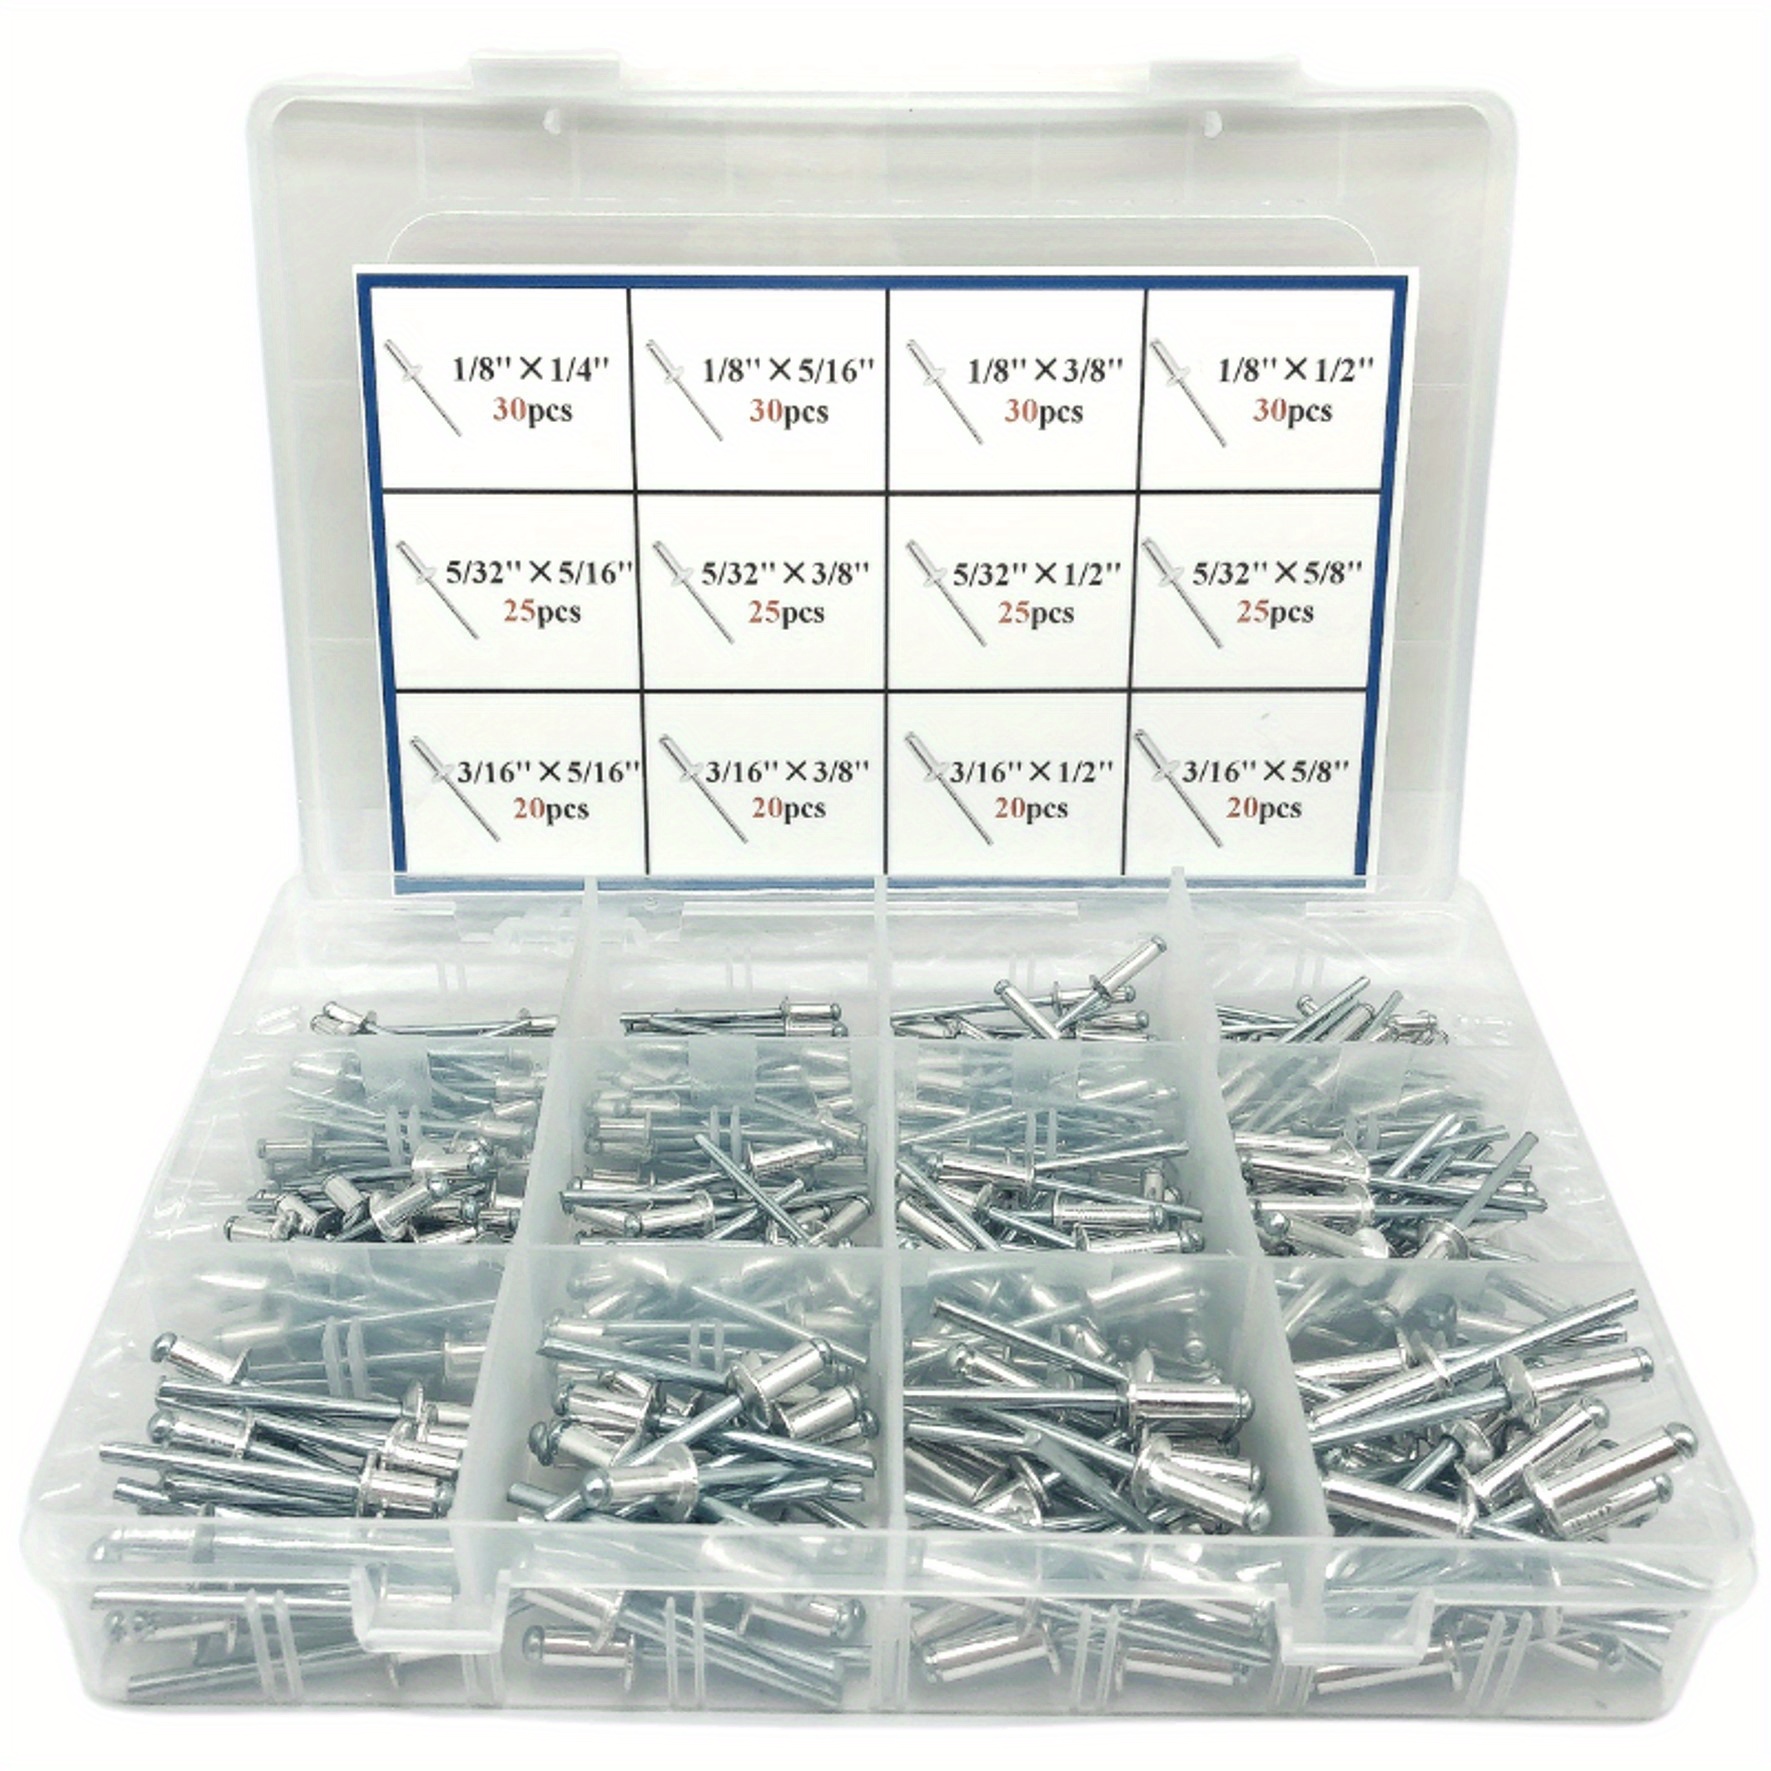 Siptenk 530PCS Pop Blind Rivets Assortment Kit, SAE Aluminum Assorted Rivet  Set 14 Sizes 3/32 1/8 5/32 3/16 1/4 Pop Rivet Kit for Metal